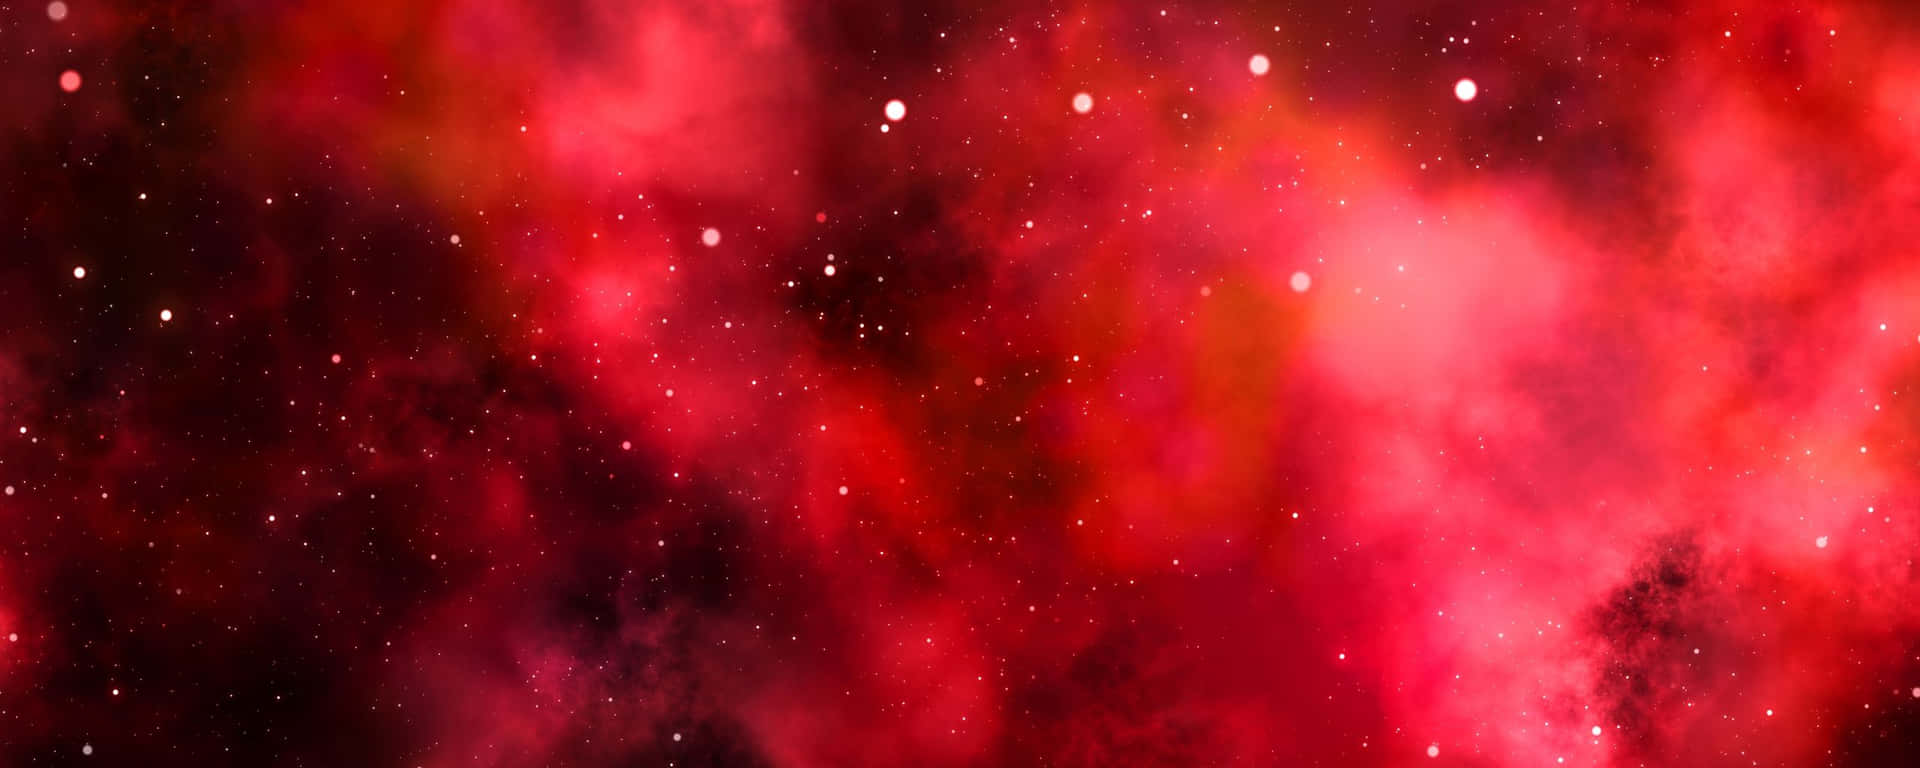 Galassiacon Nuvole Rosse Ultra Wide Hd Sfondo